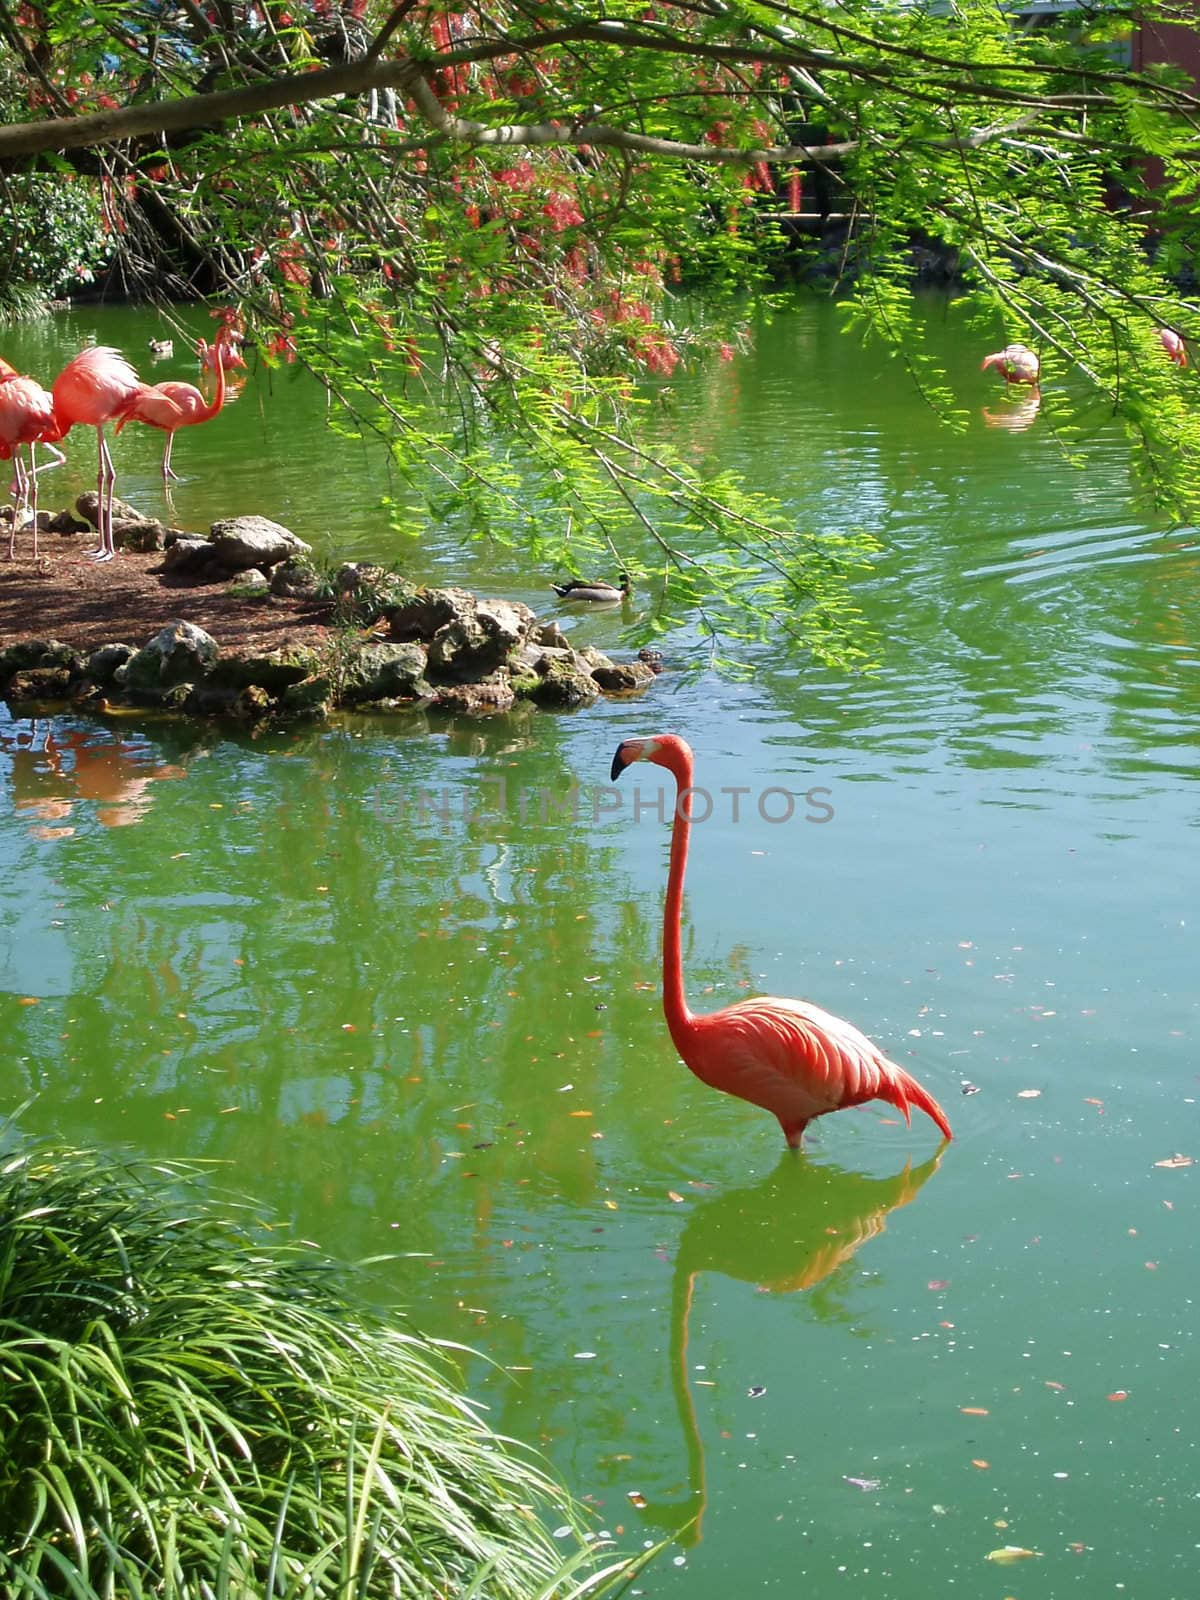 Flamingo by quackersnaps